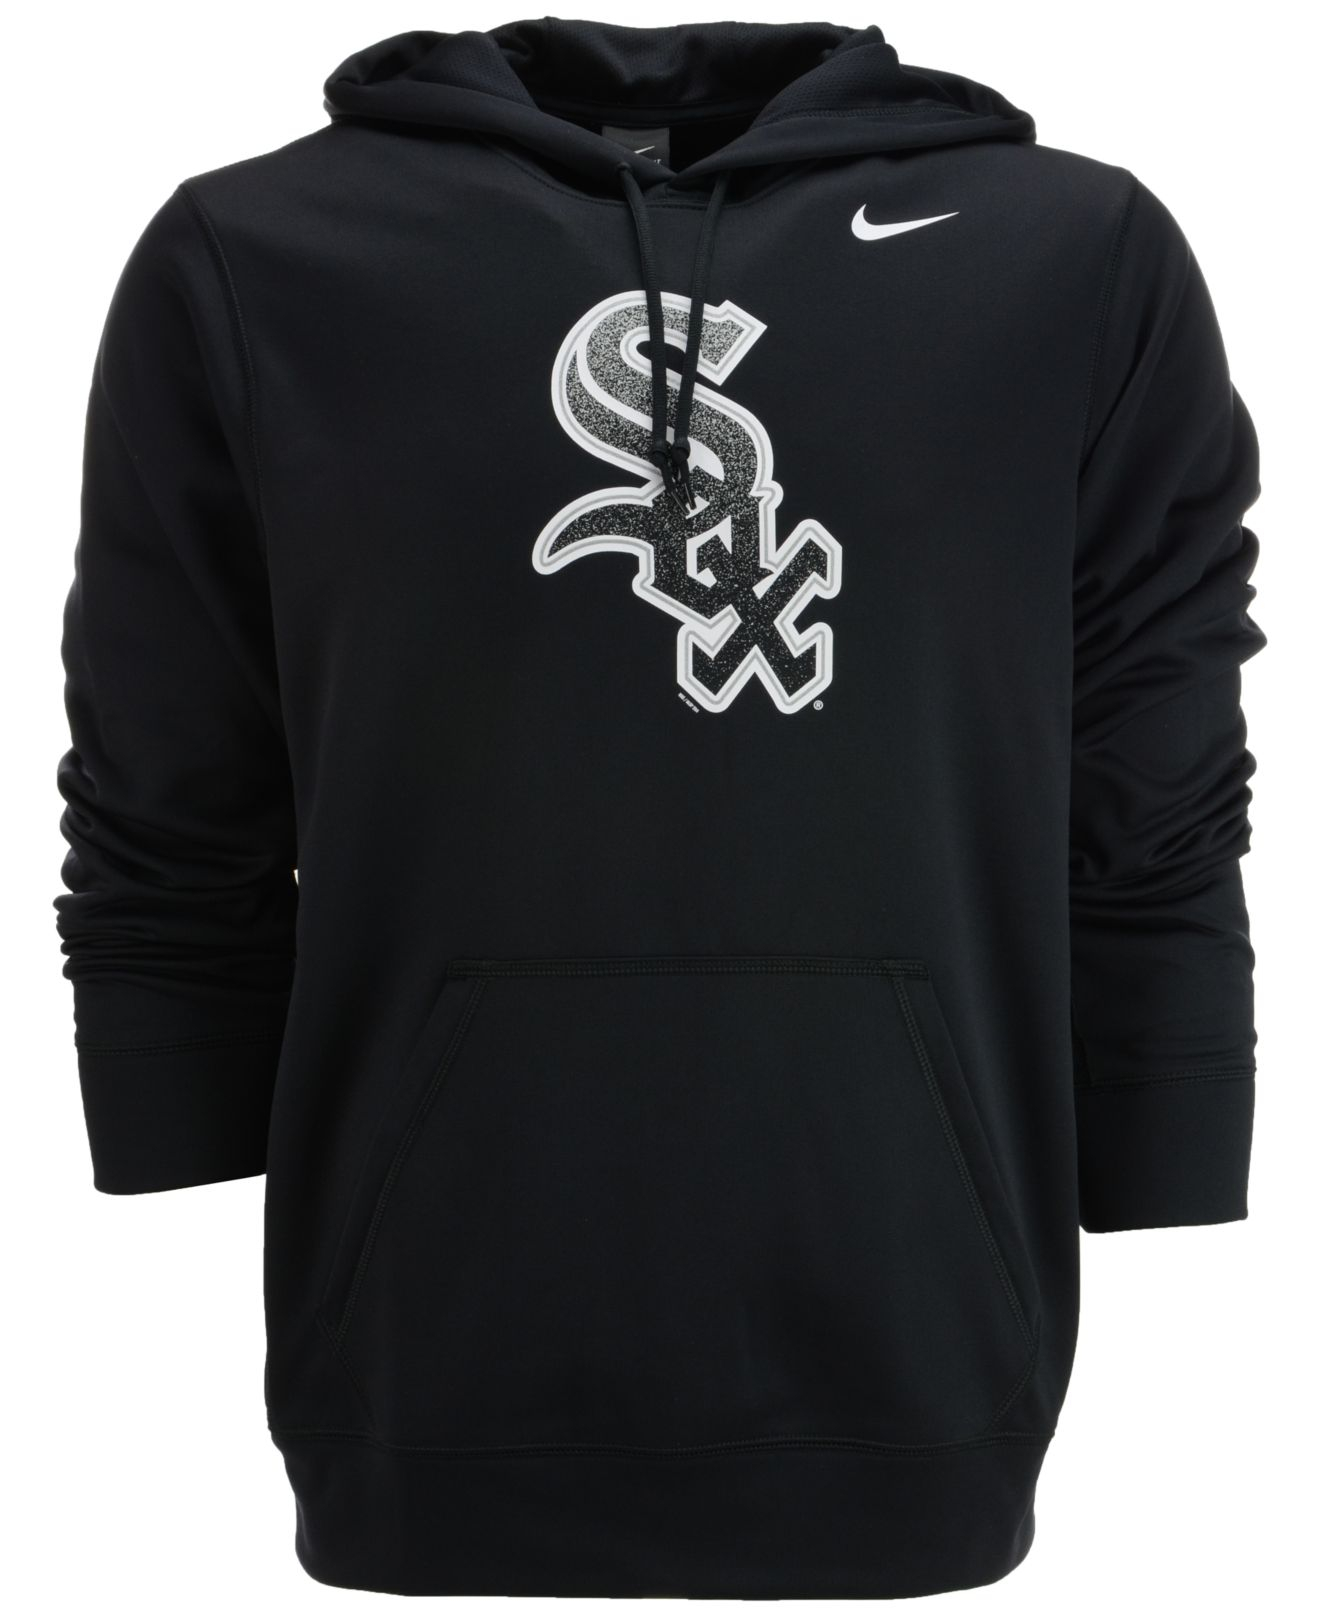 Lyst - Nike Mens Chicago White Sox Logo Performance Hoodie in Black for Men